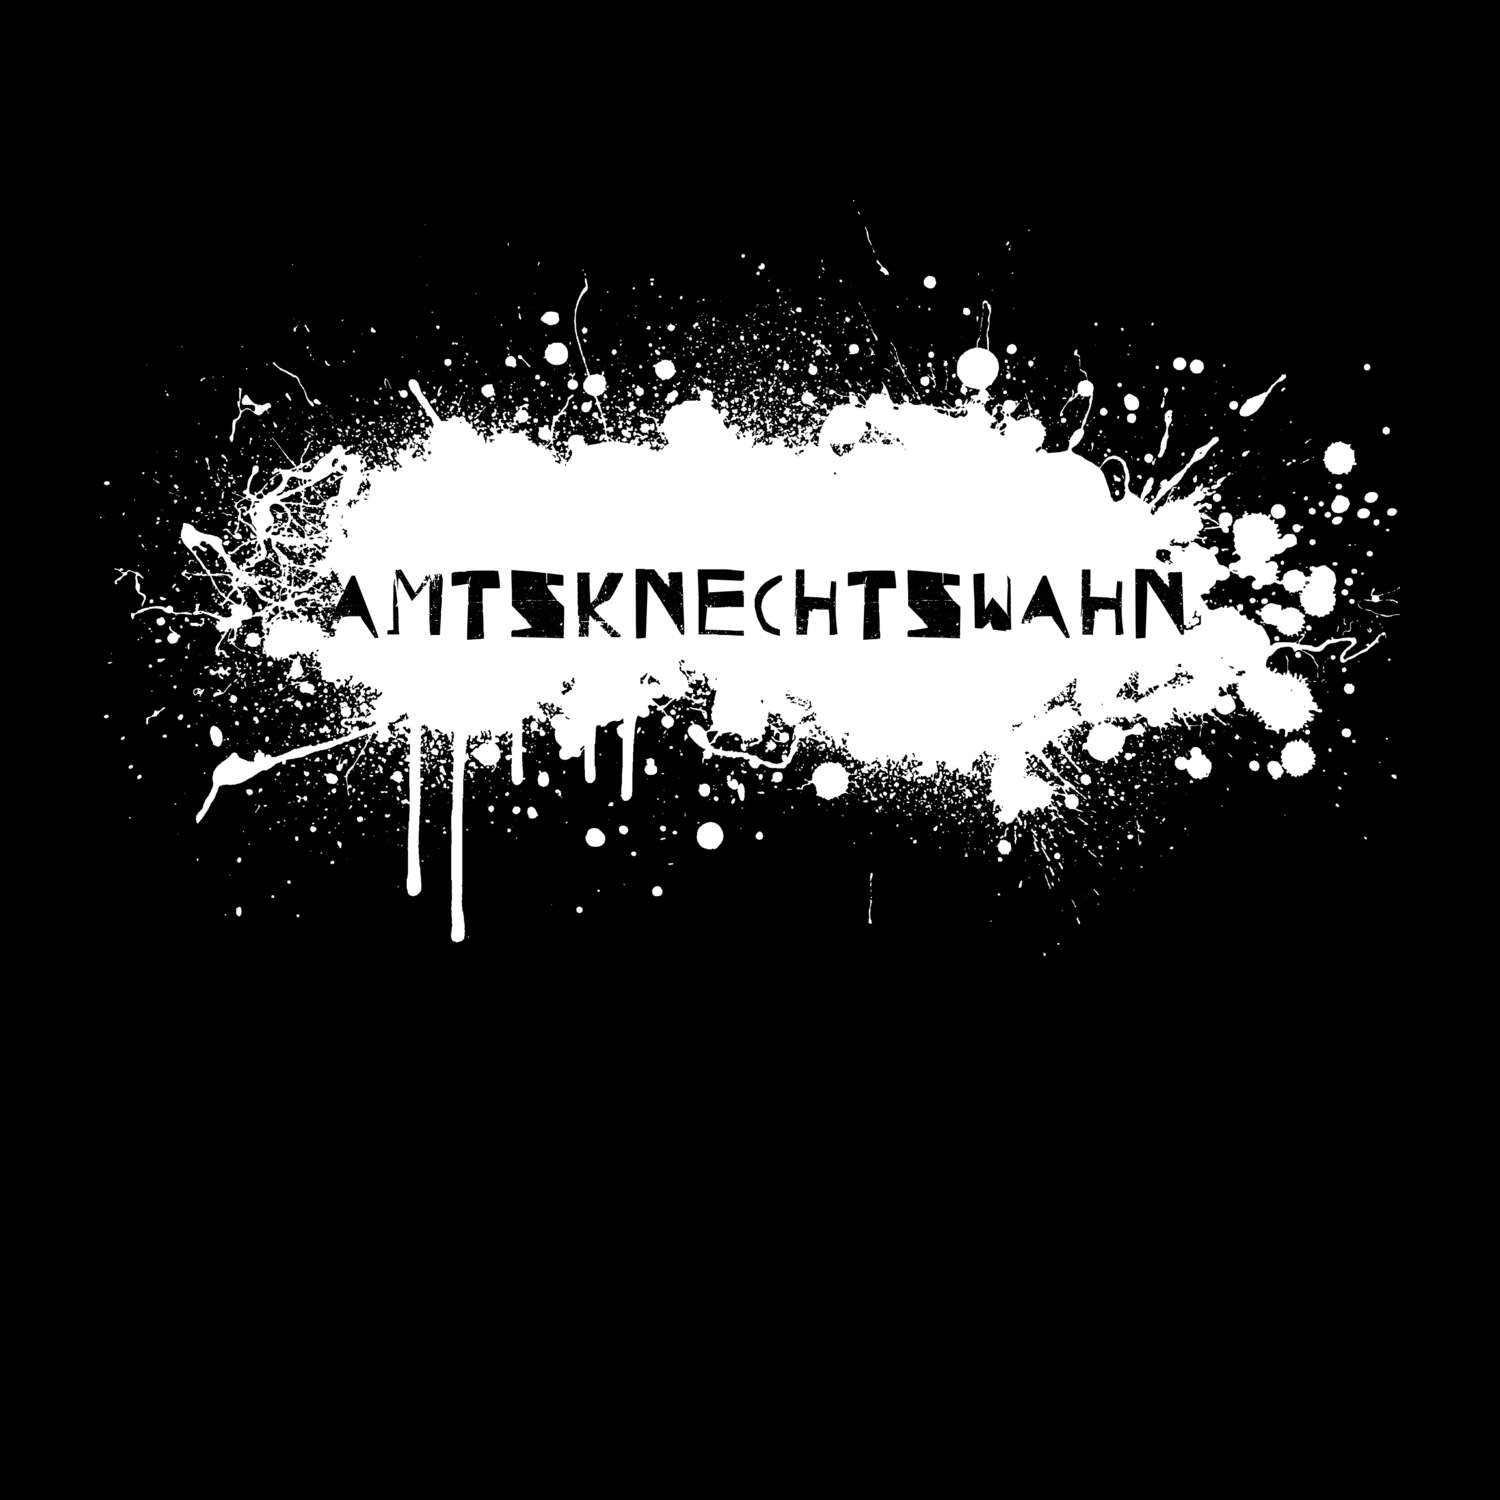 Amtsknechtswahn T-Shirt »Paint Splash Punk«